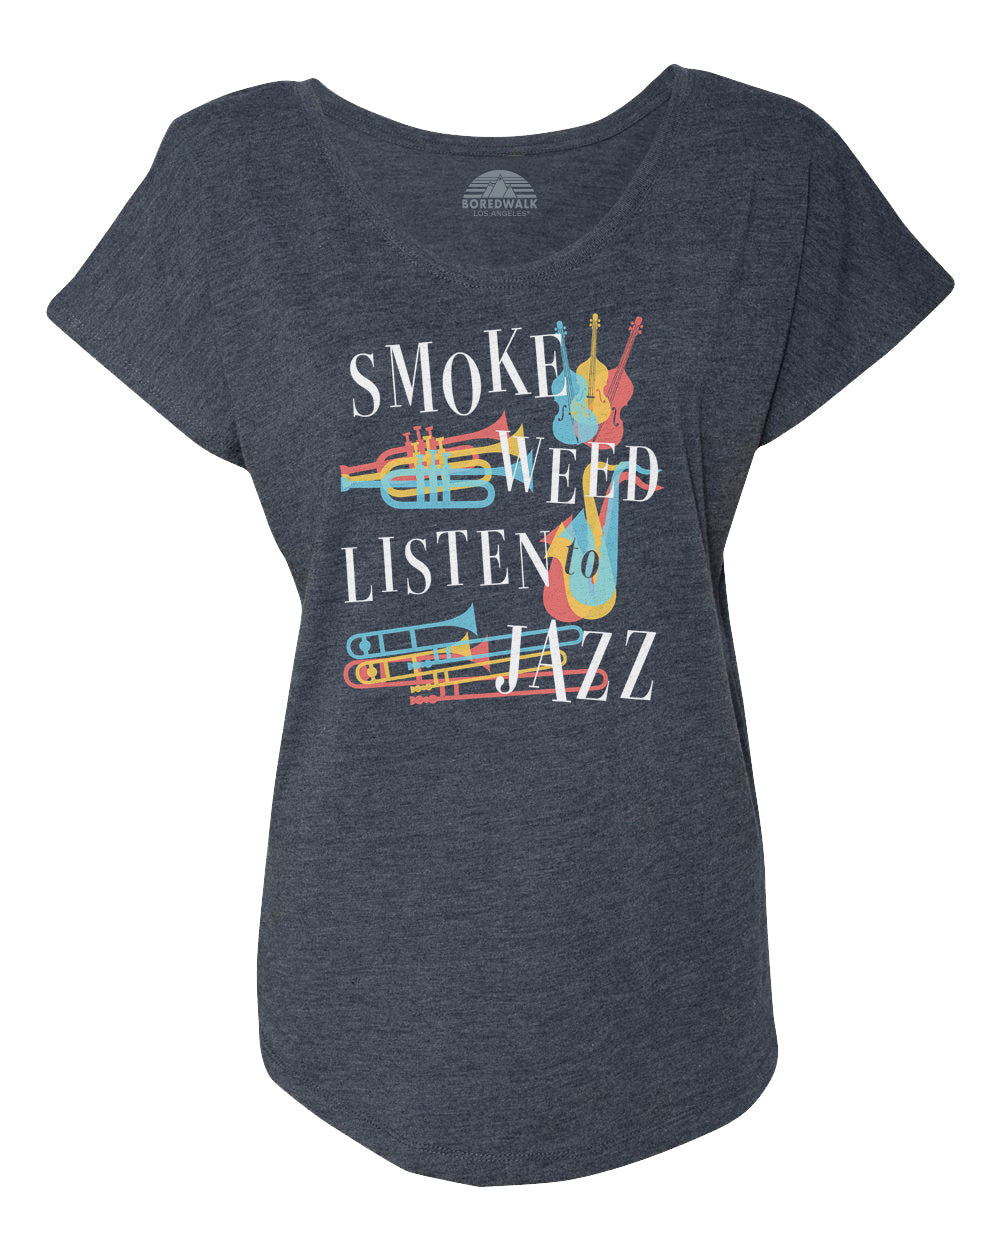 Women's Smoke Weed Listen to Jazz Scoop Neck T-Shirt